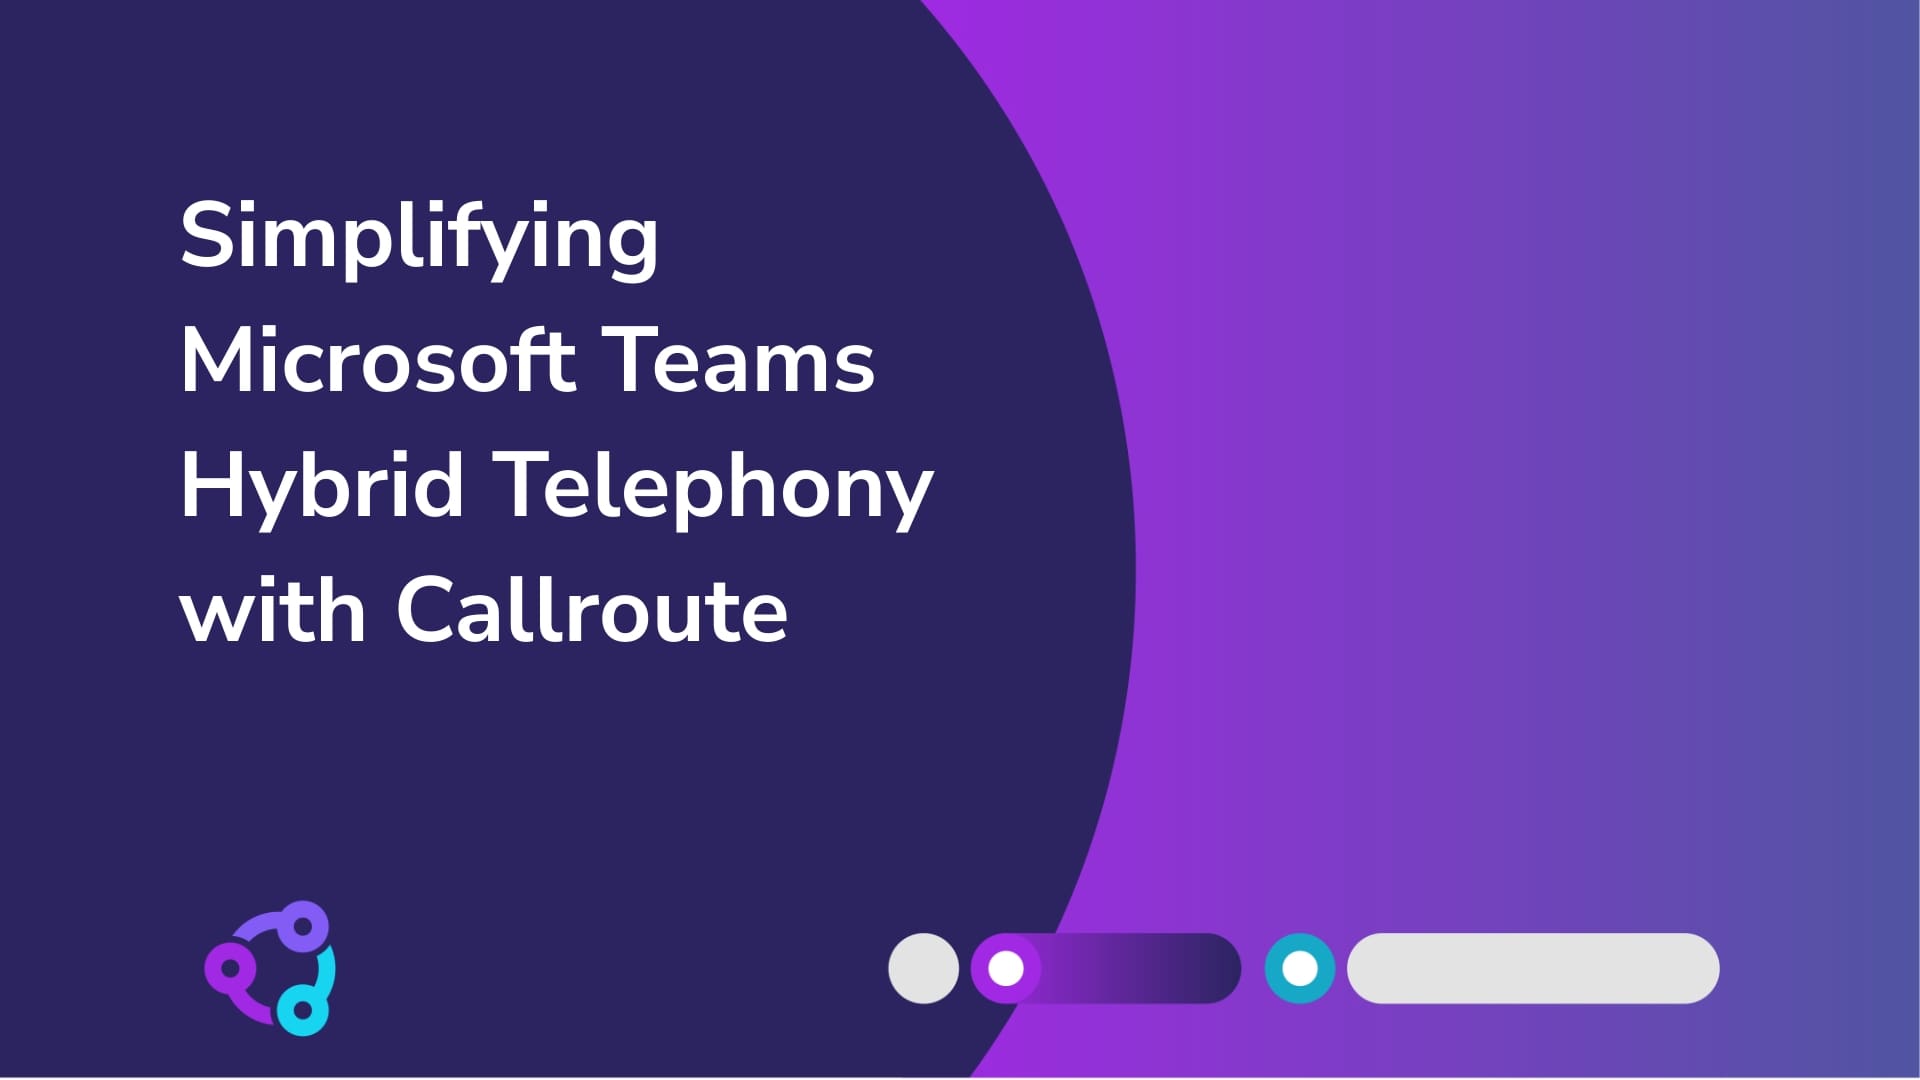 Microsoft Teams hybrid telephony